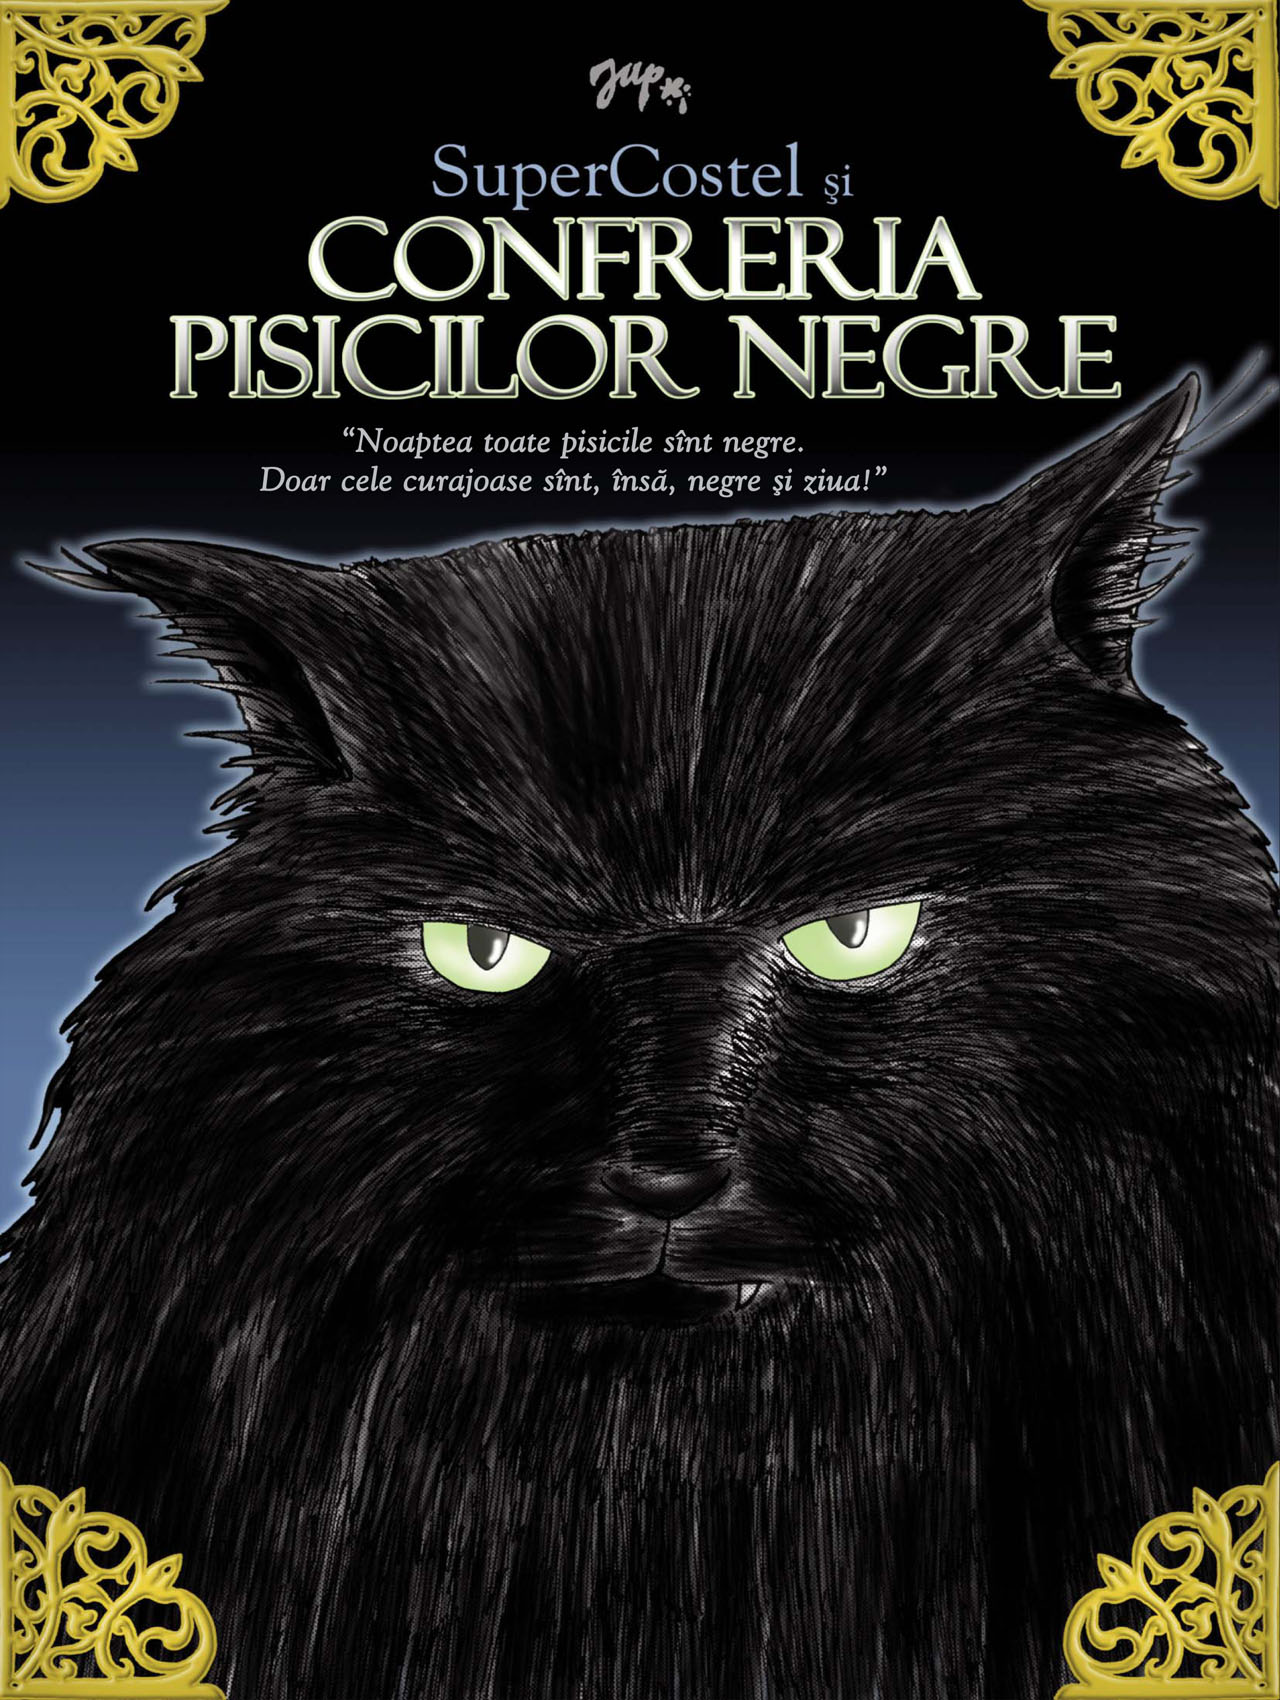 SuperCostel si Confreria Pisicilor Negre